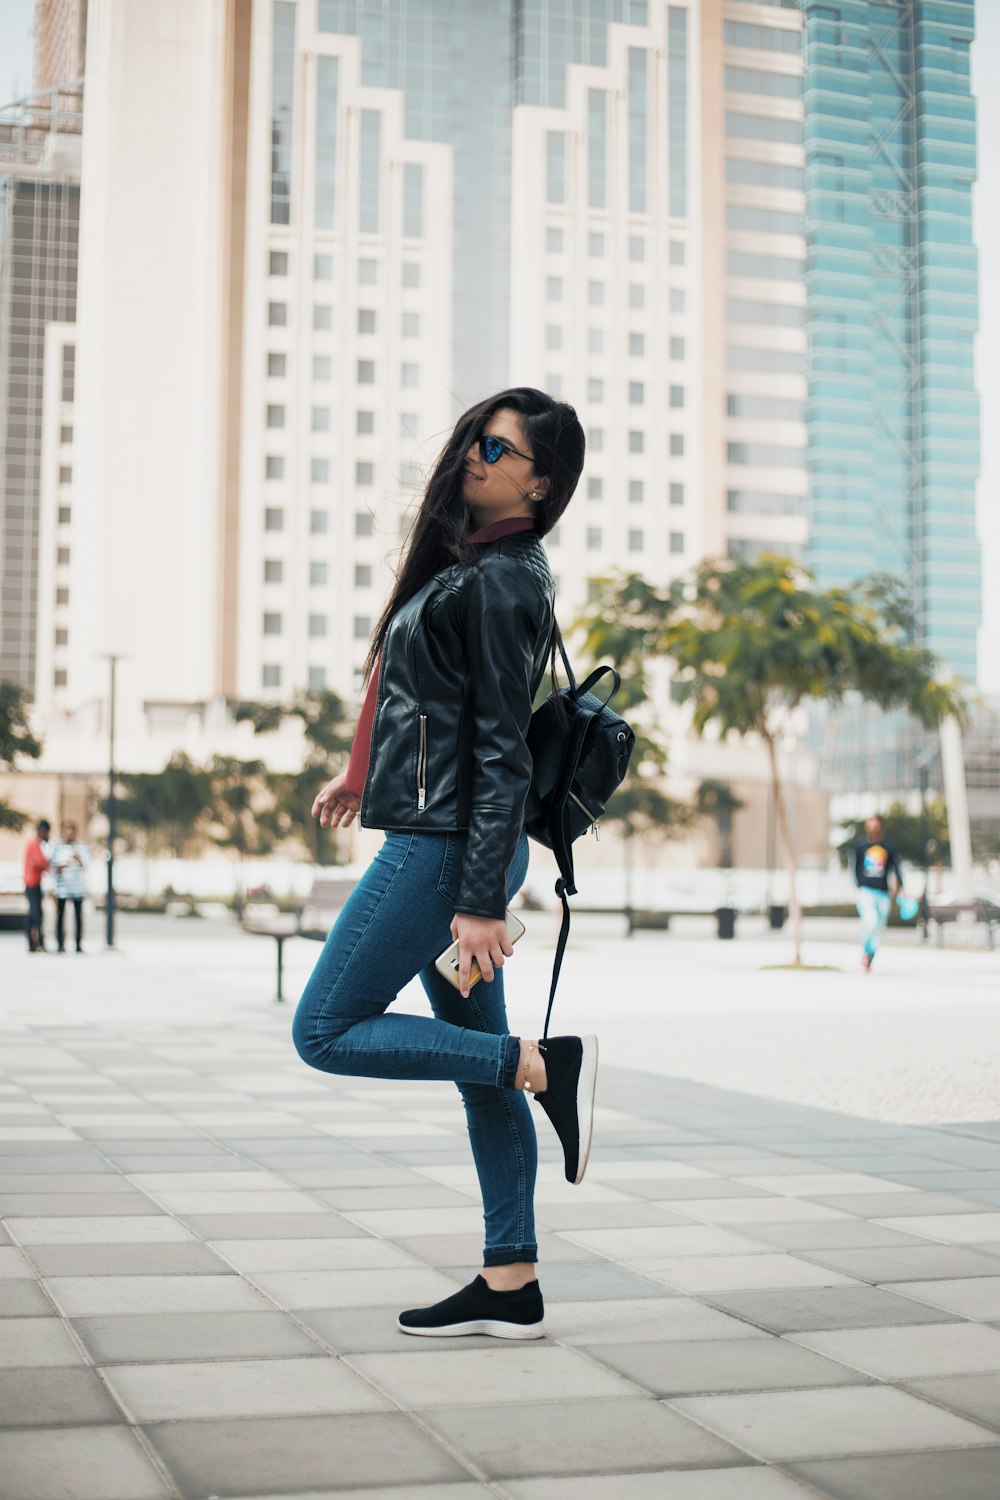 Woman in black jacket and blue denim jeans standing on sidewalk during daytime photo Free Dubai - united arab emirates on Unsplash